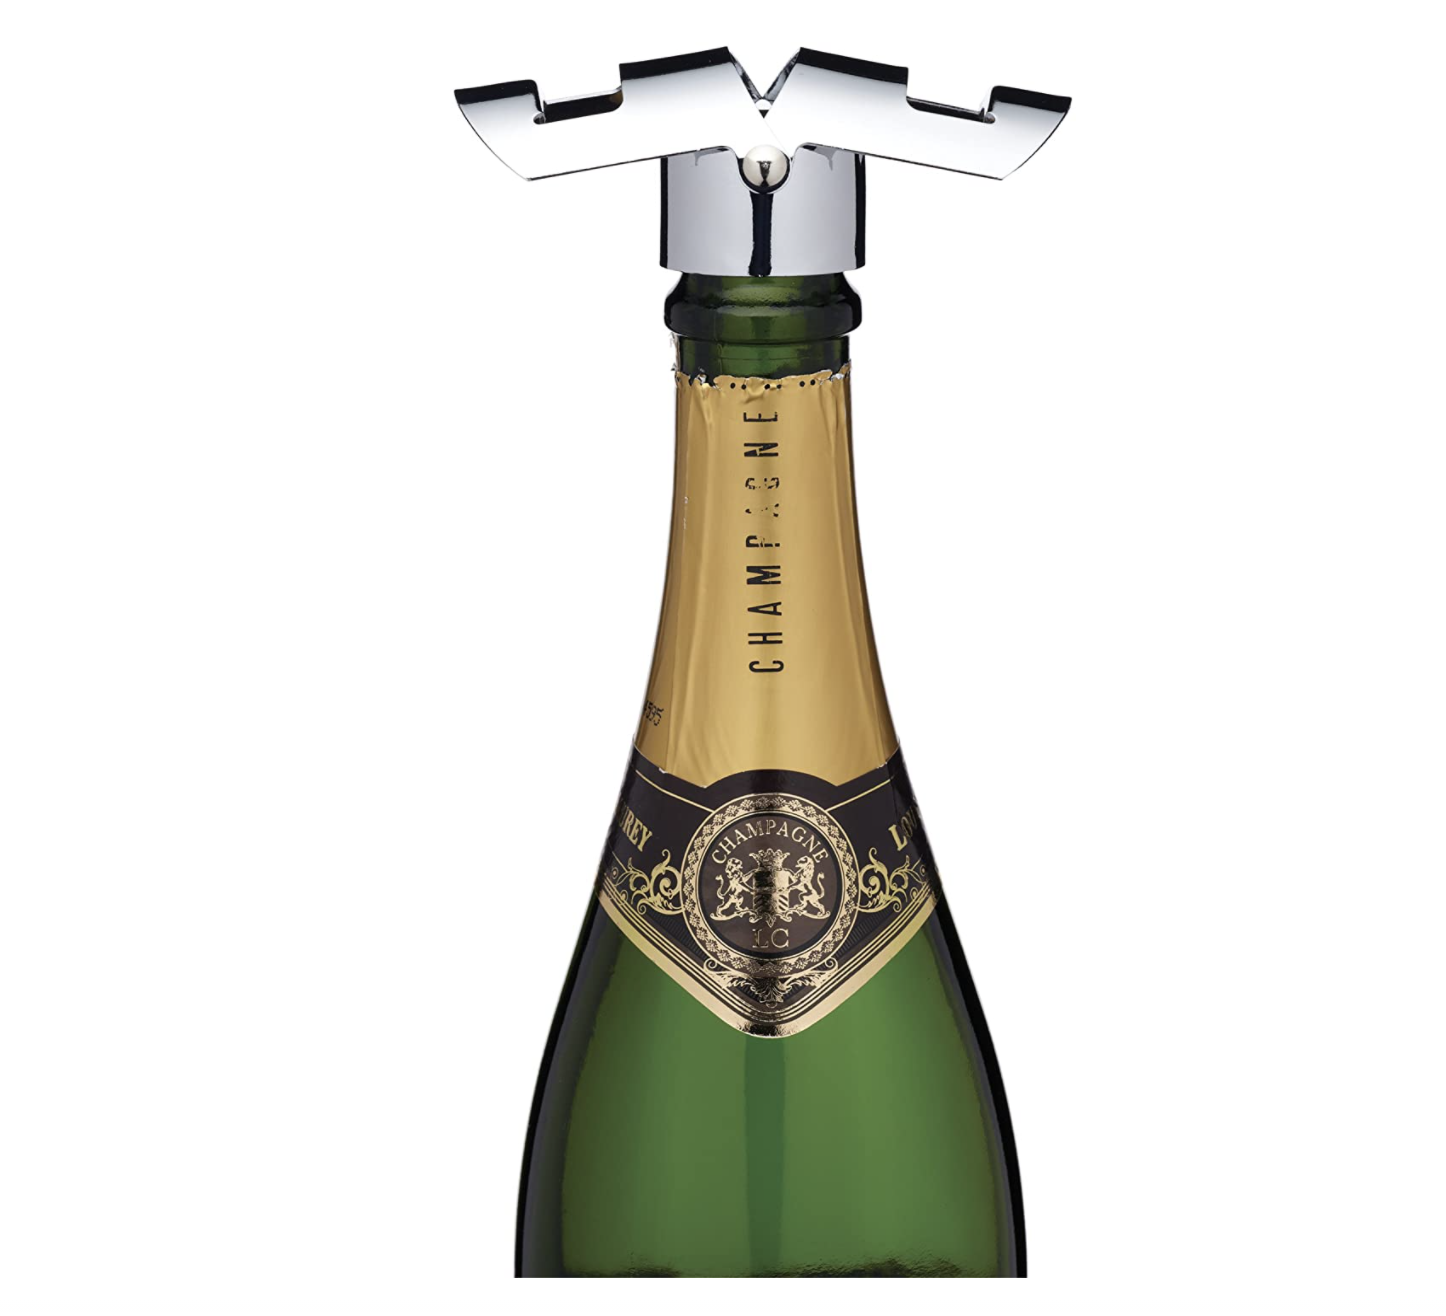 champagne bottle with bottle stopper